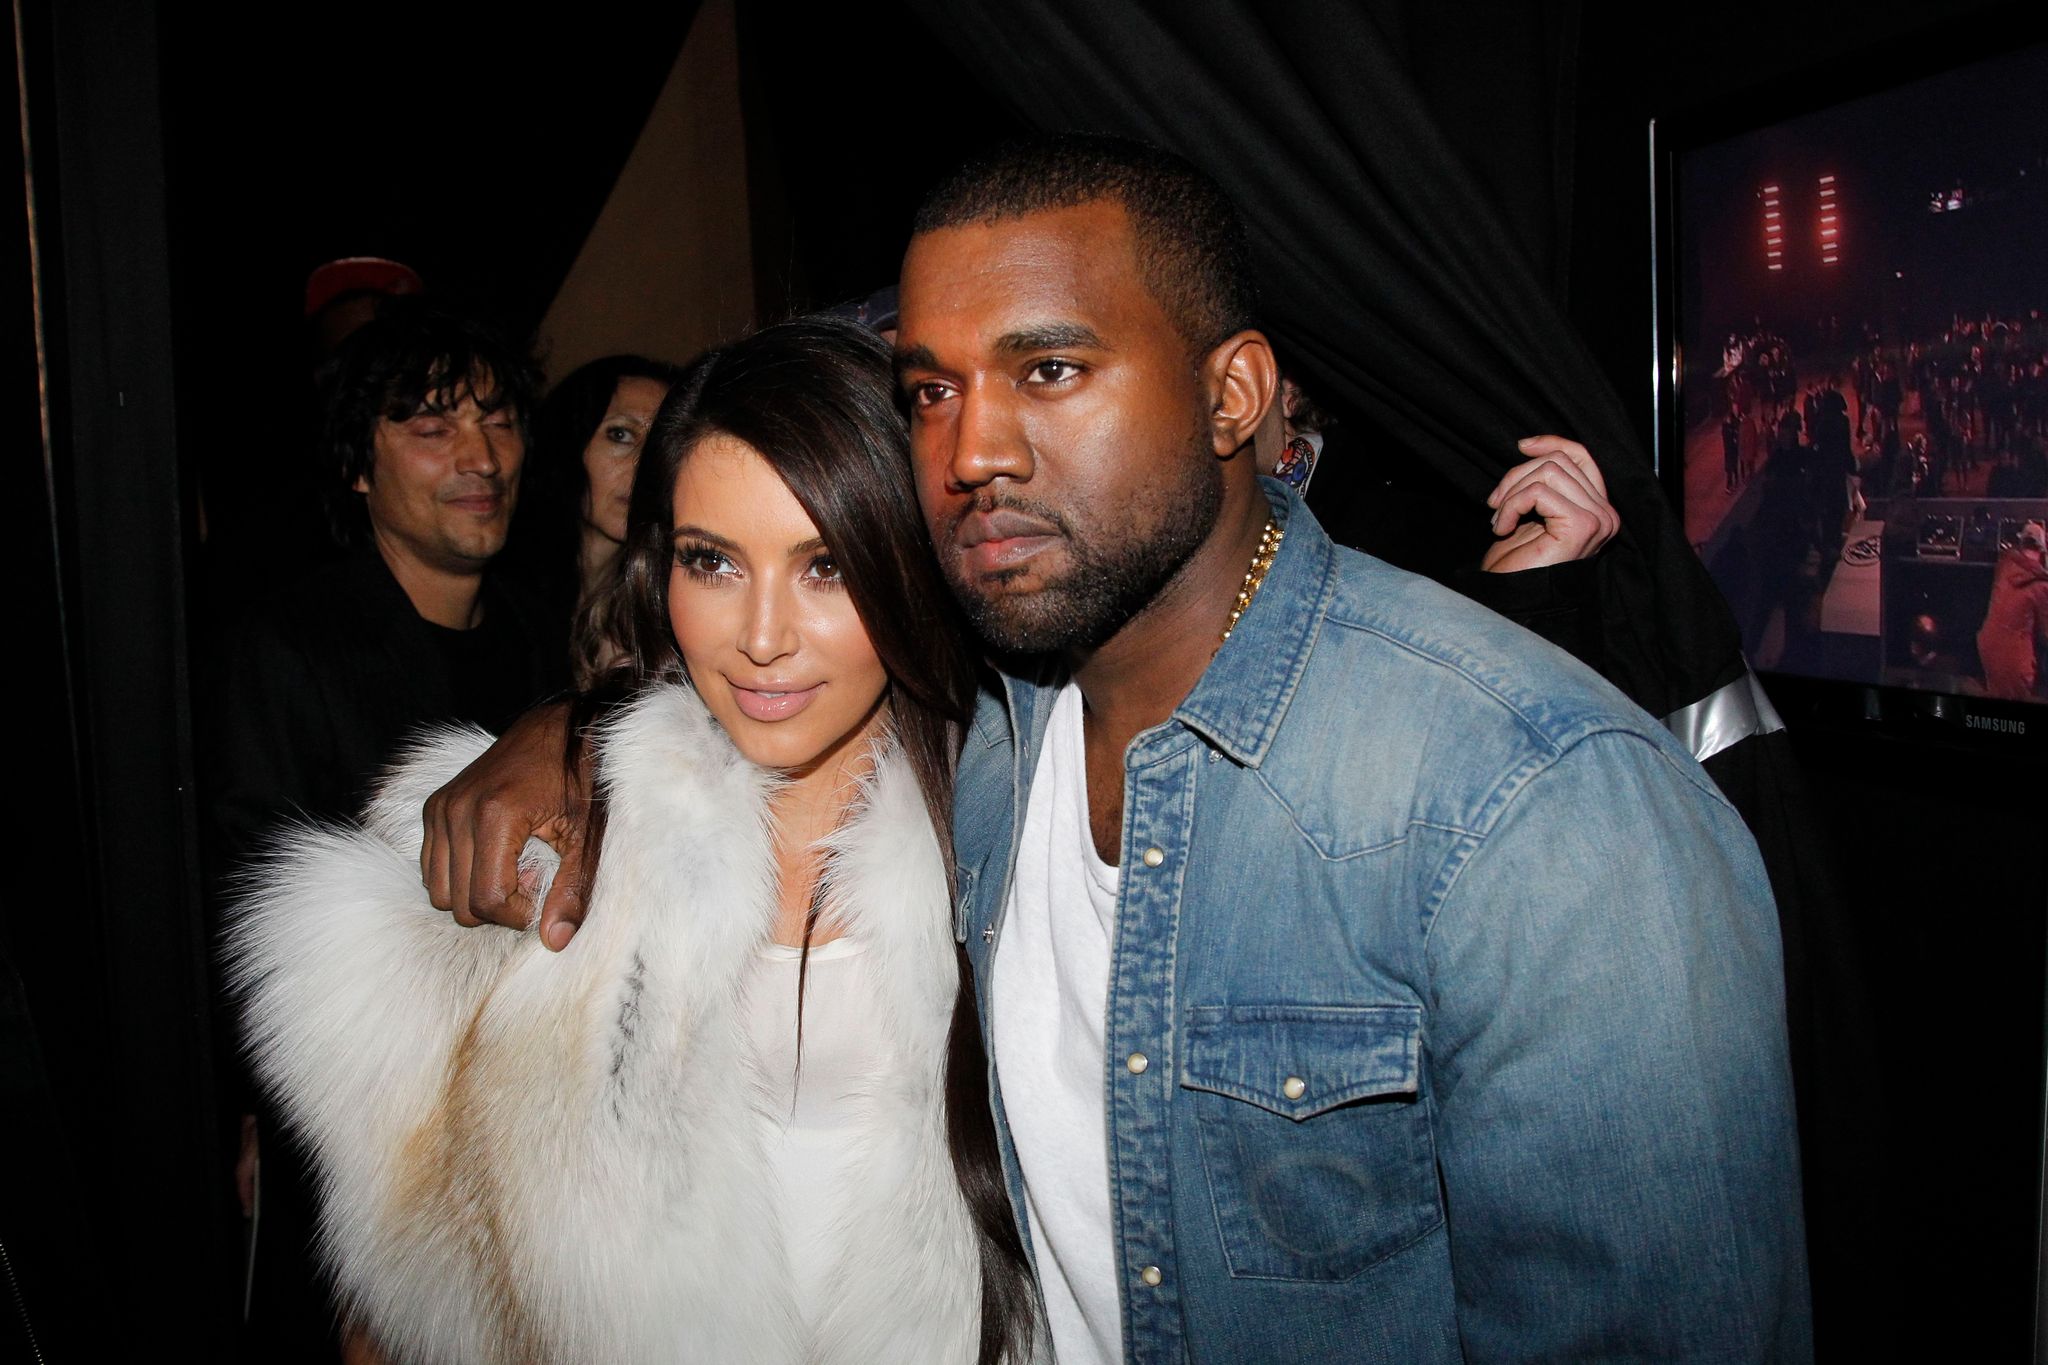 Kim Kardashian and Kanye West at Paris Fashion Week in 2012 in Paris, France | Source: Getty Images